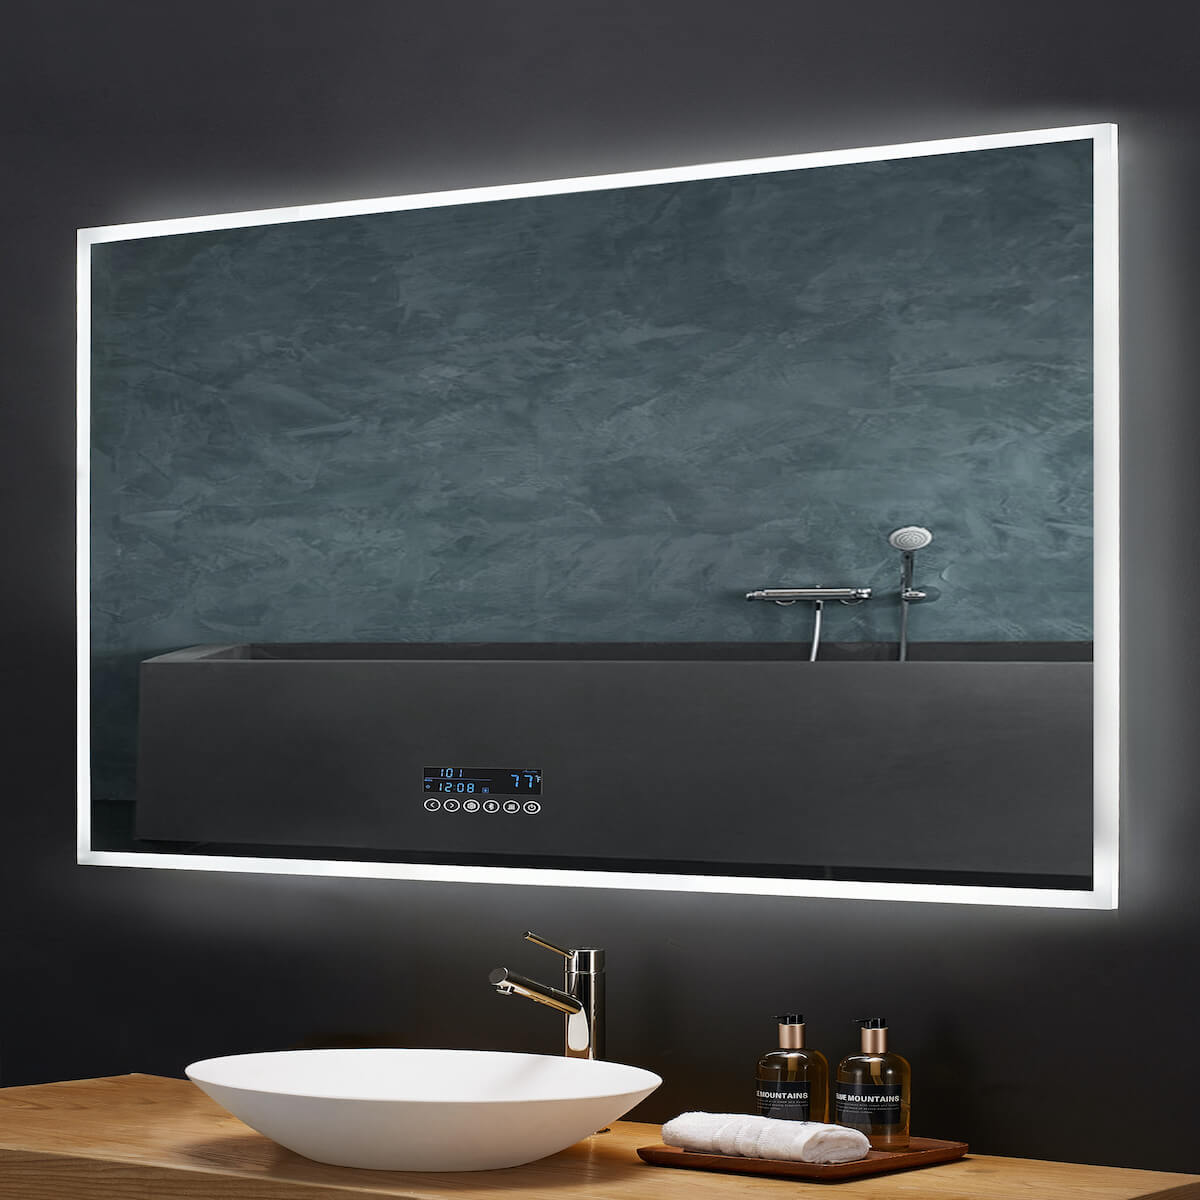 Ancerre Designs OTTO 30 inch x 40 inch LED Octagon Black Framed